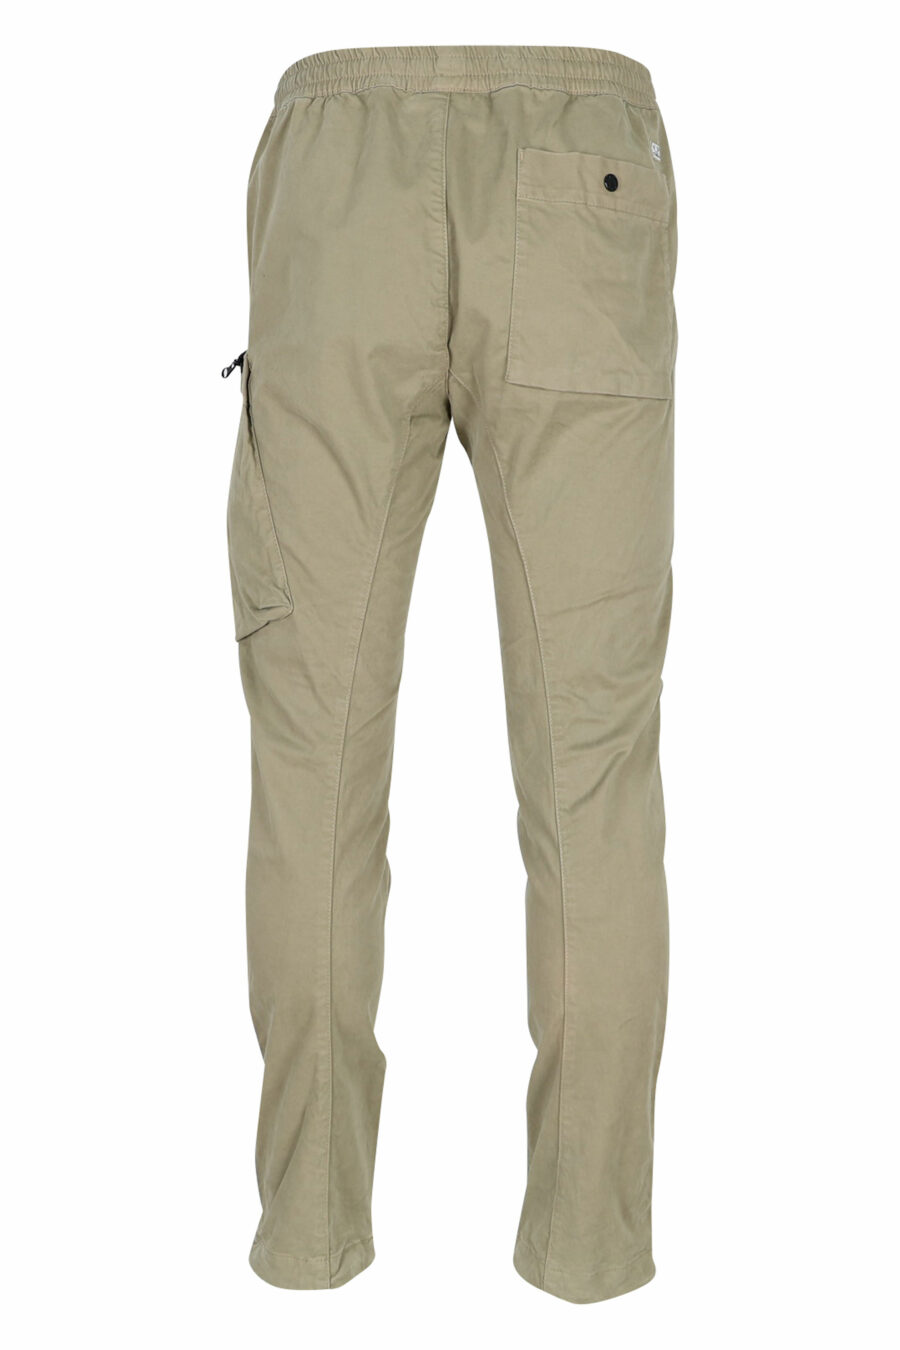 C.P. Company - Pantalón beige de satén elástico con bolsillo lateral y logo  lente - BLS Fashion